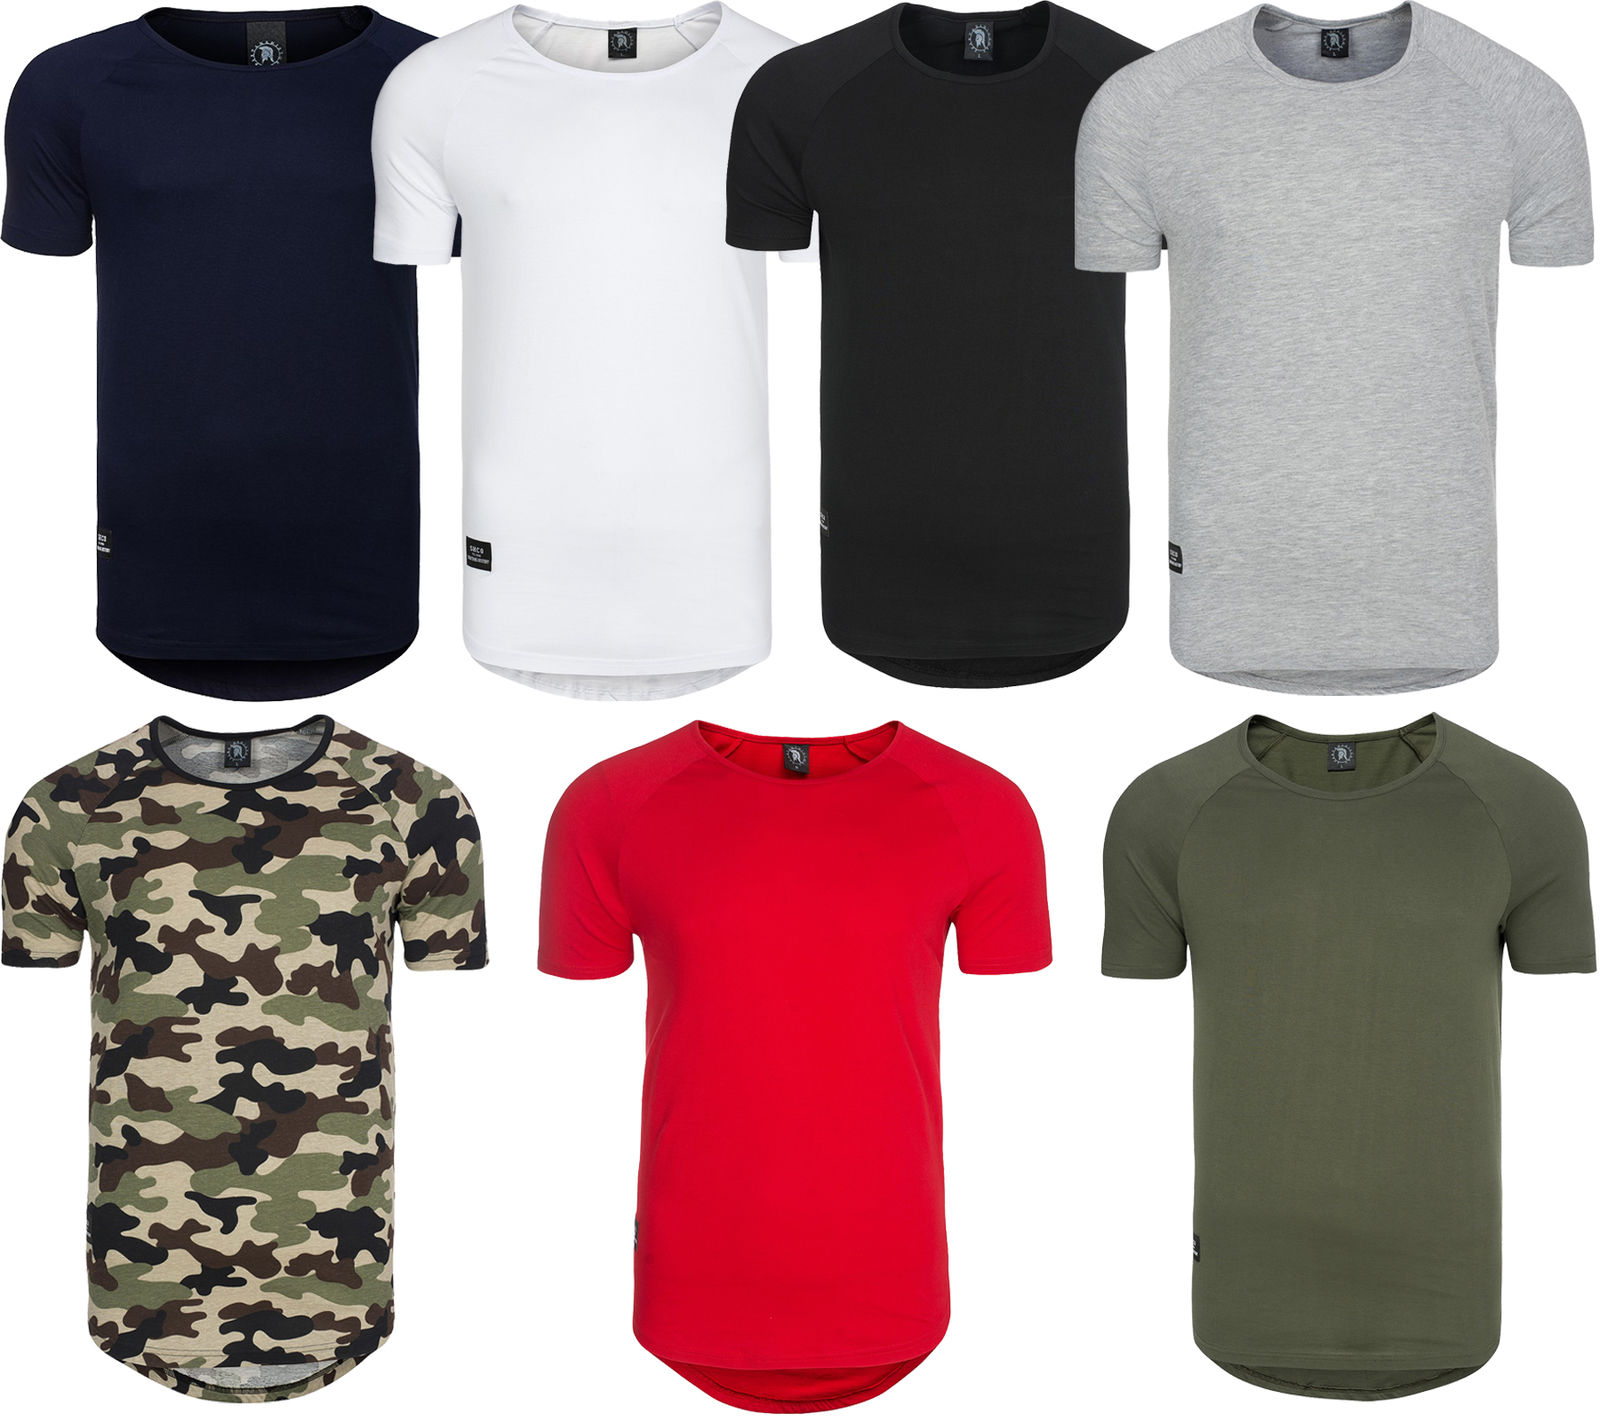 NEU Spartans History Basic Oval Shirt Herren T-Shirt verschiedene Farben SALE